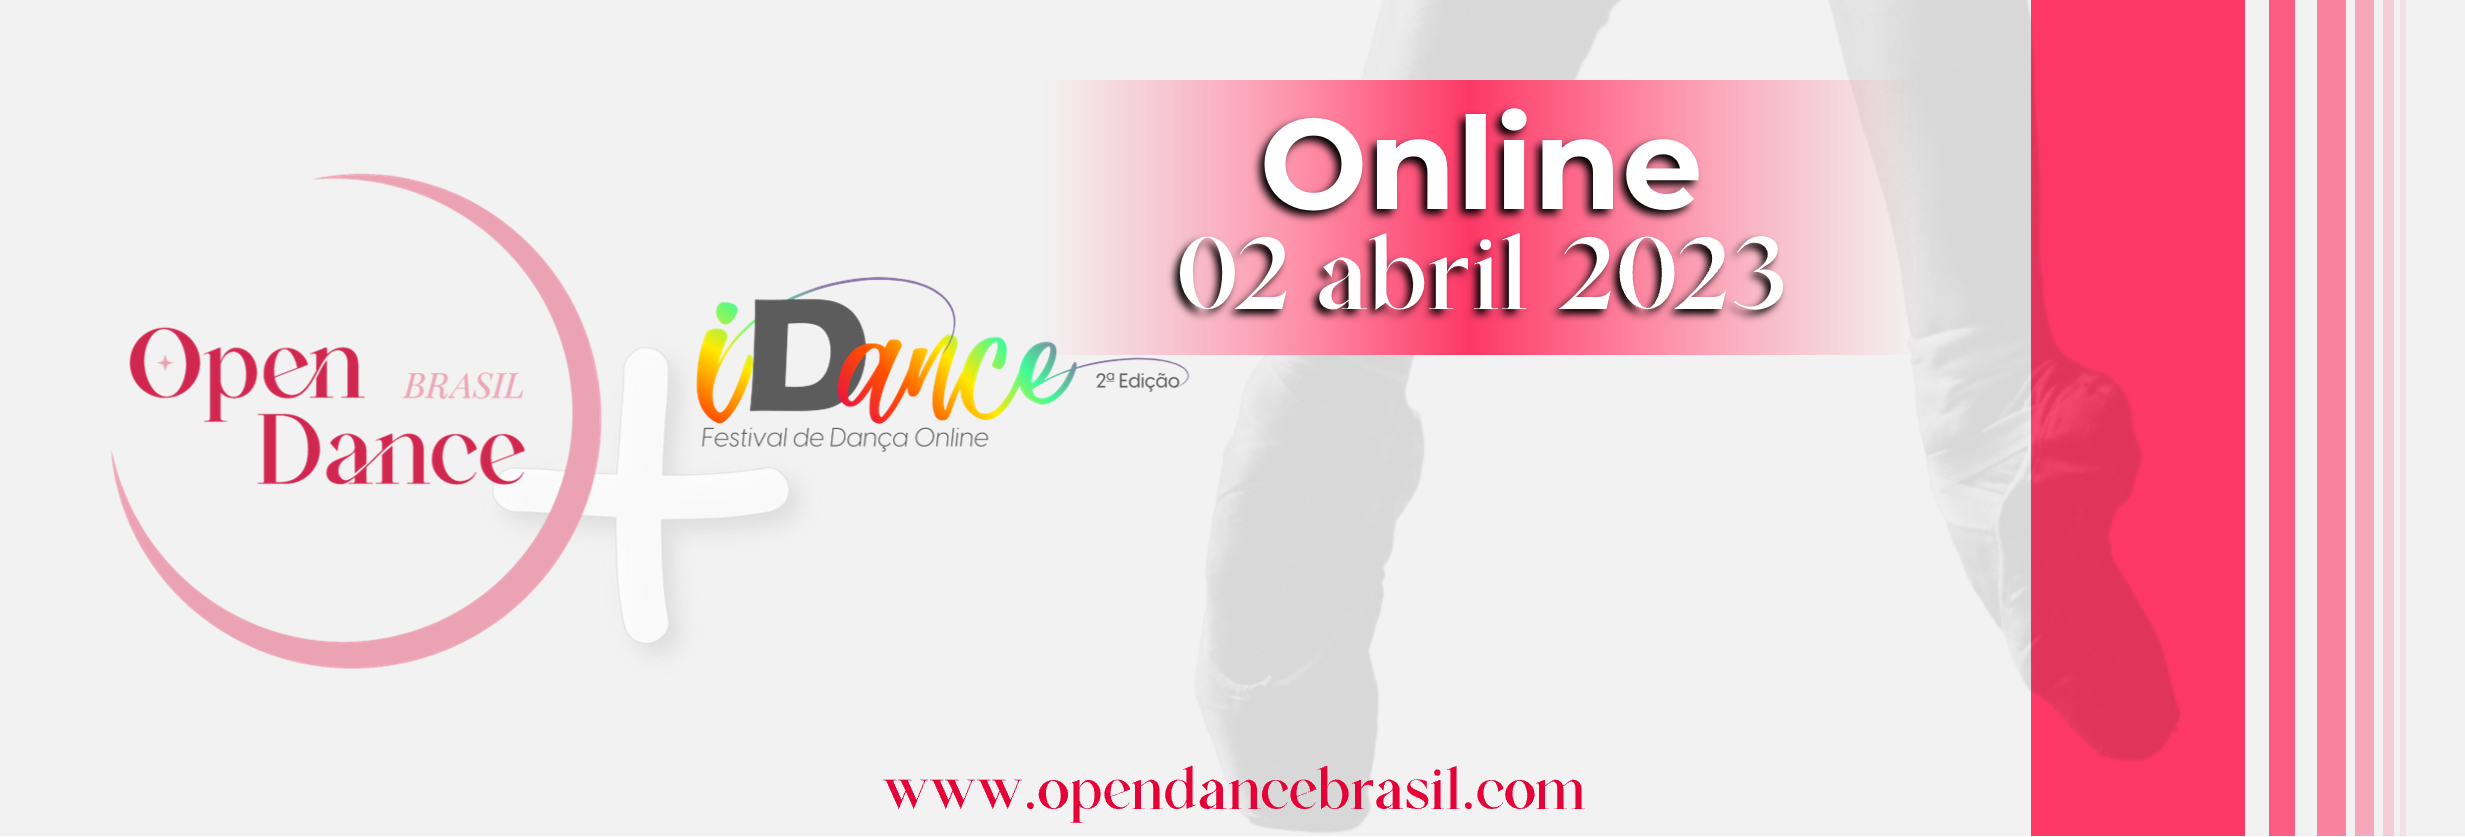 Open Dance Brasil Online